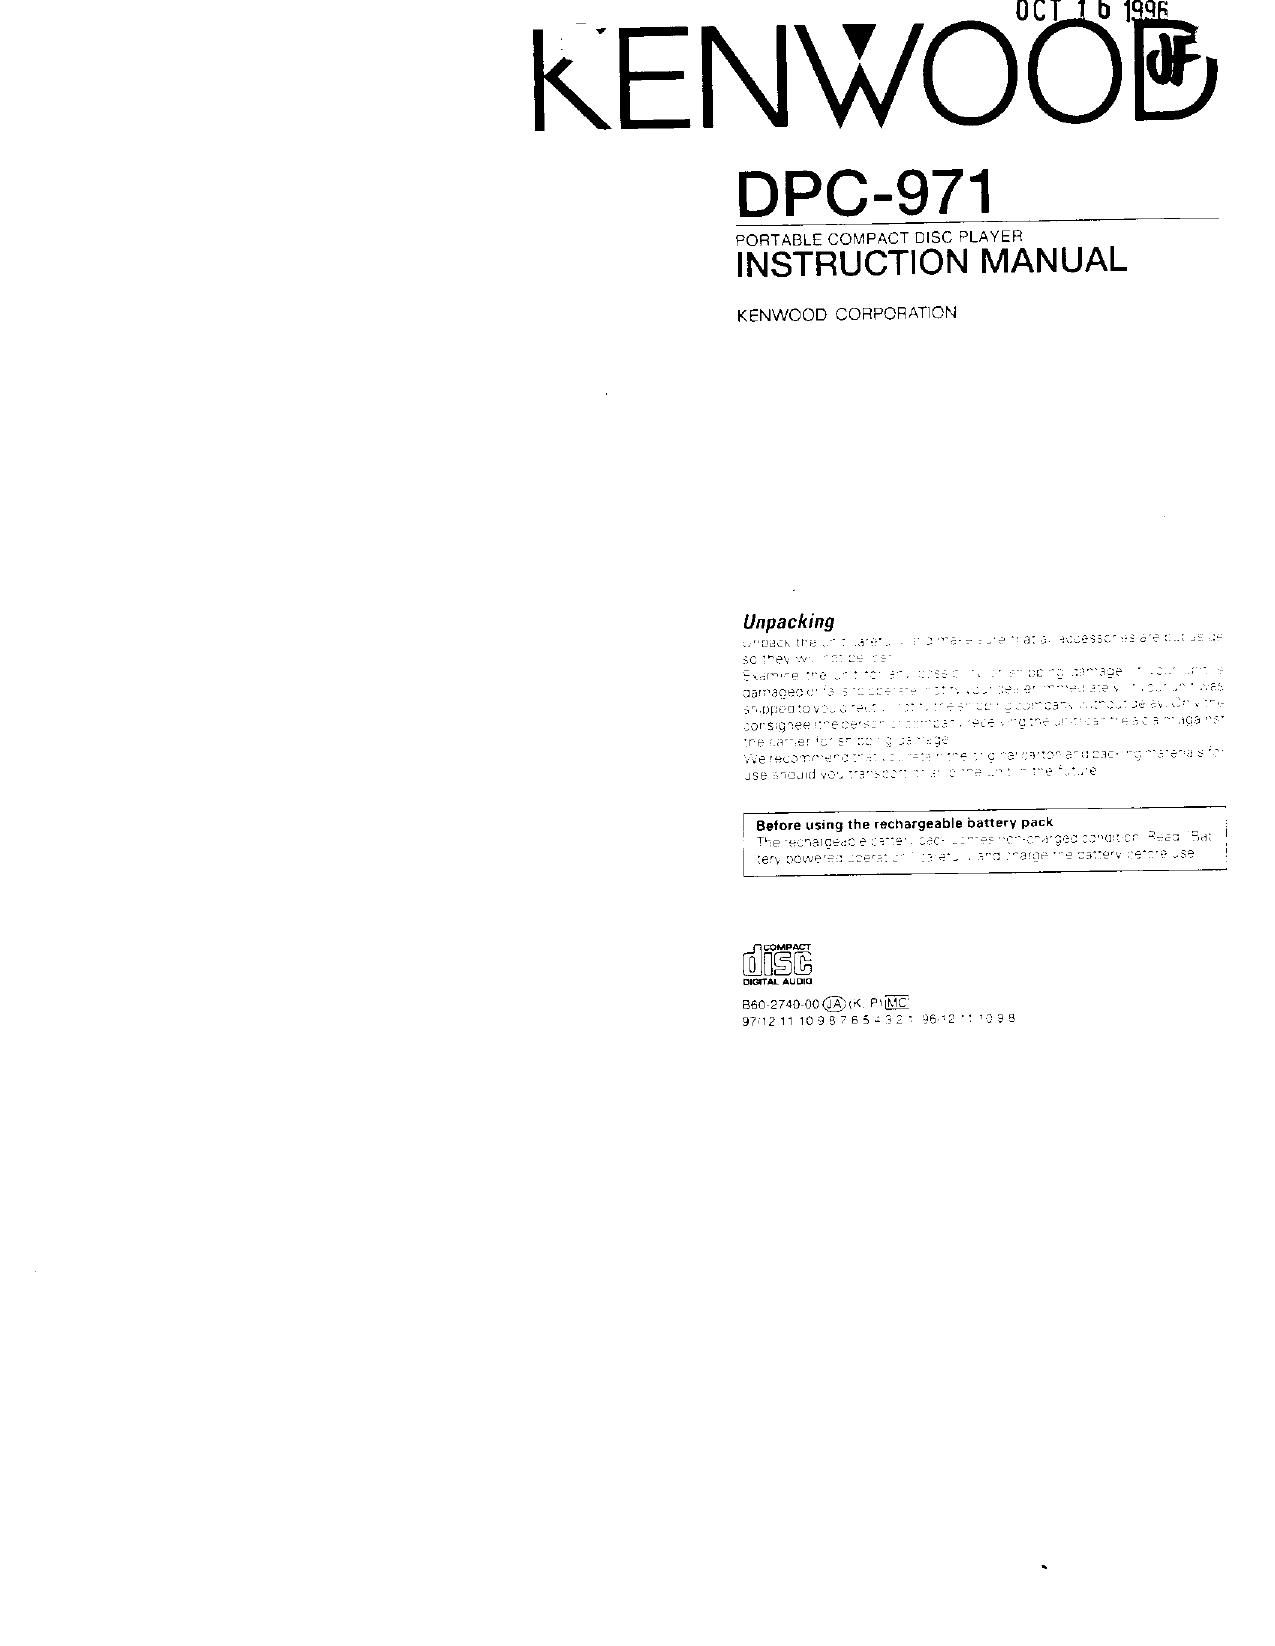 Kenwood DPC 971 Owners Manual